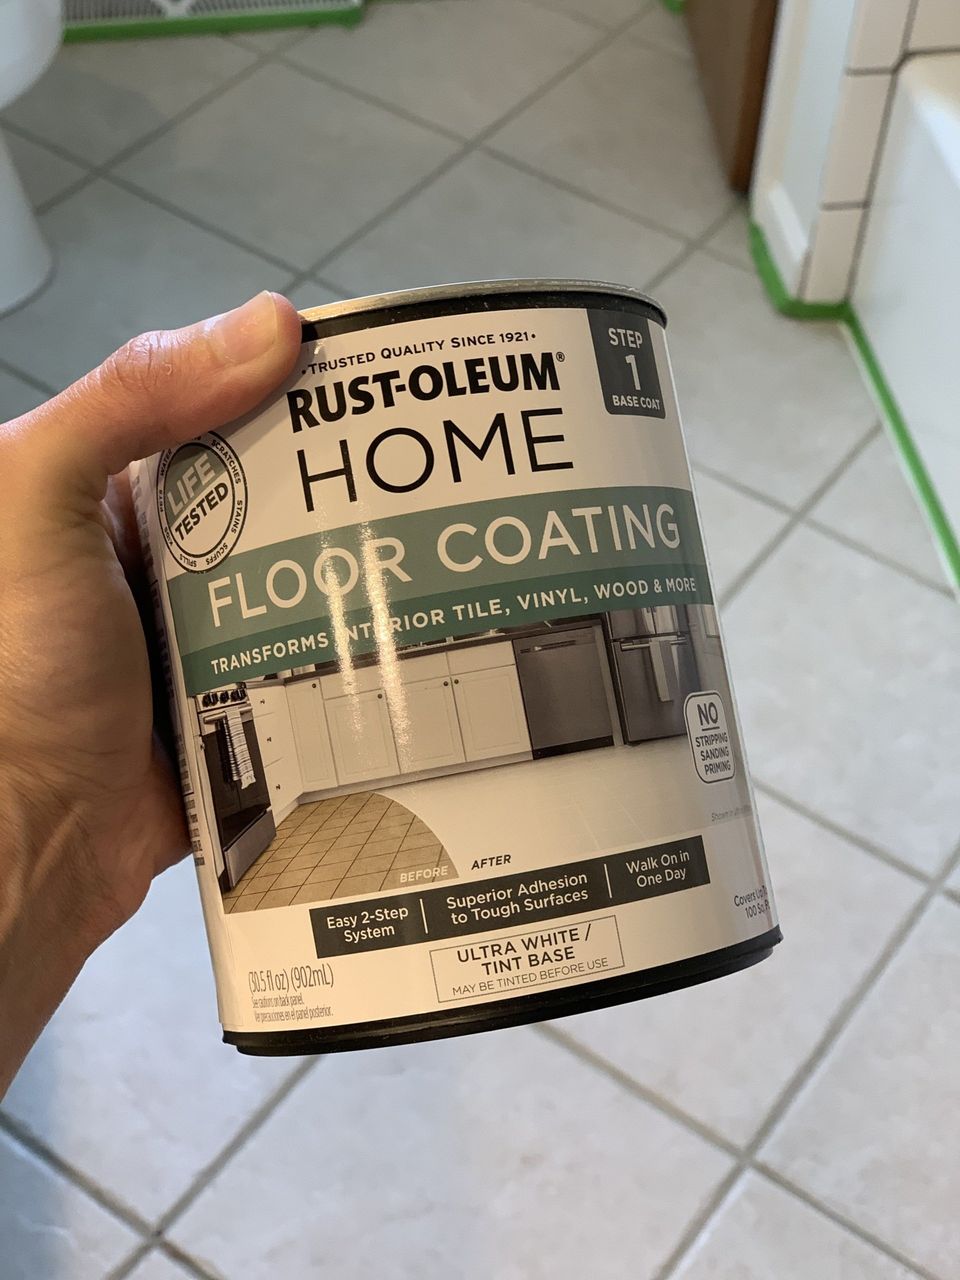 rust-oleum home floor coating step 1 base coat